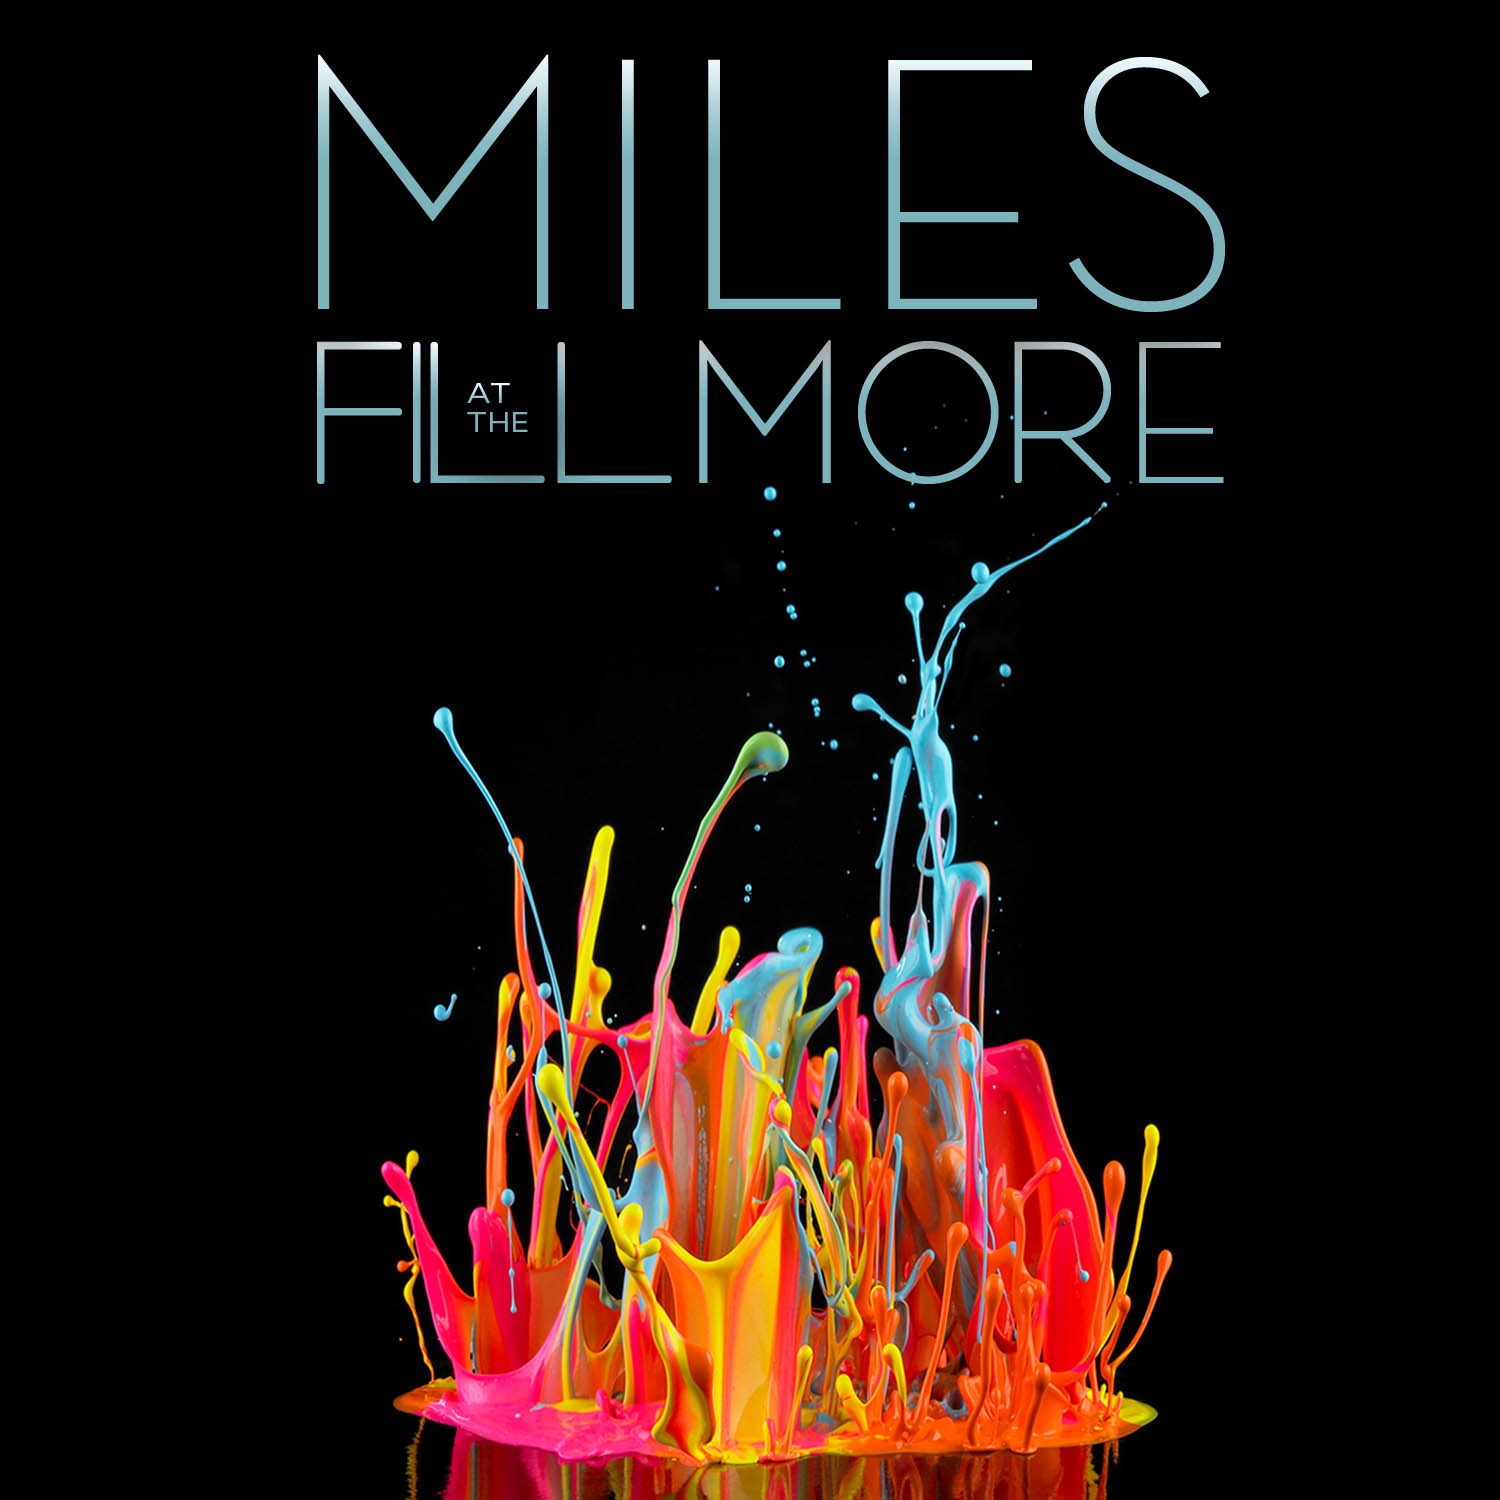 Miles Davis’ Miles At The Fillmore